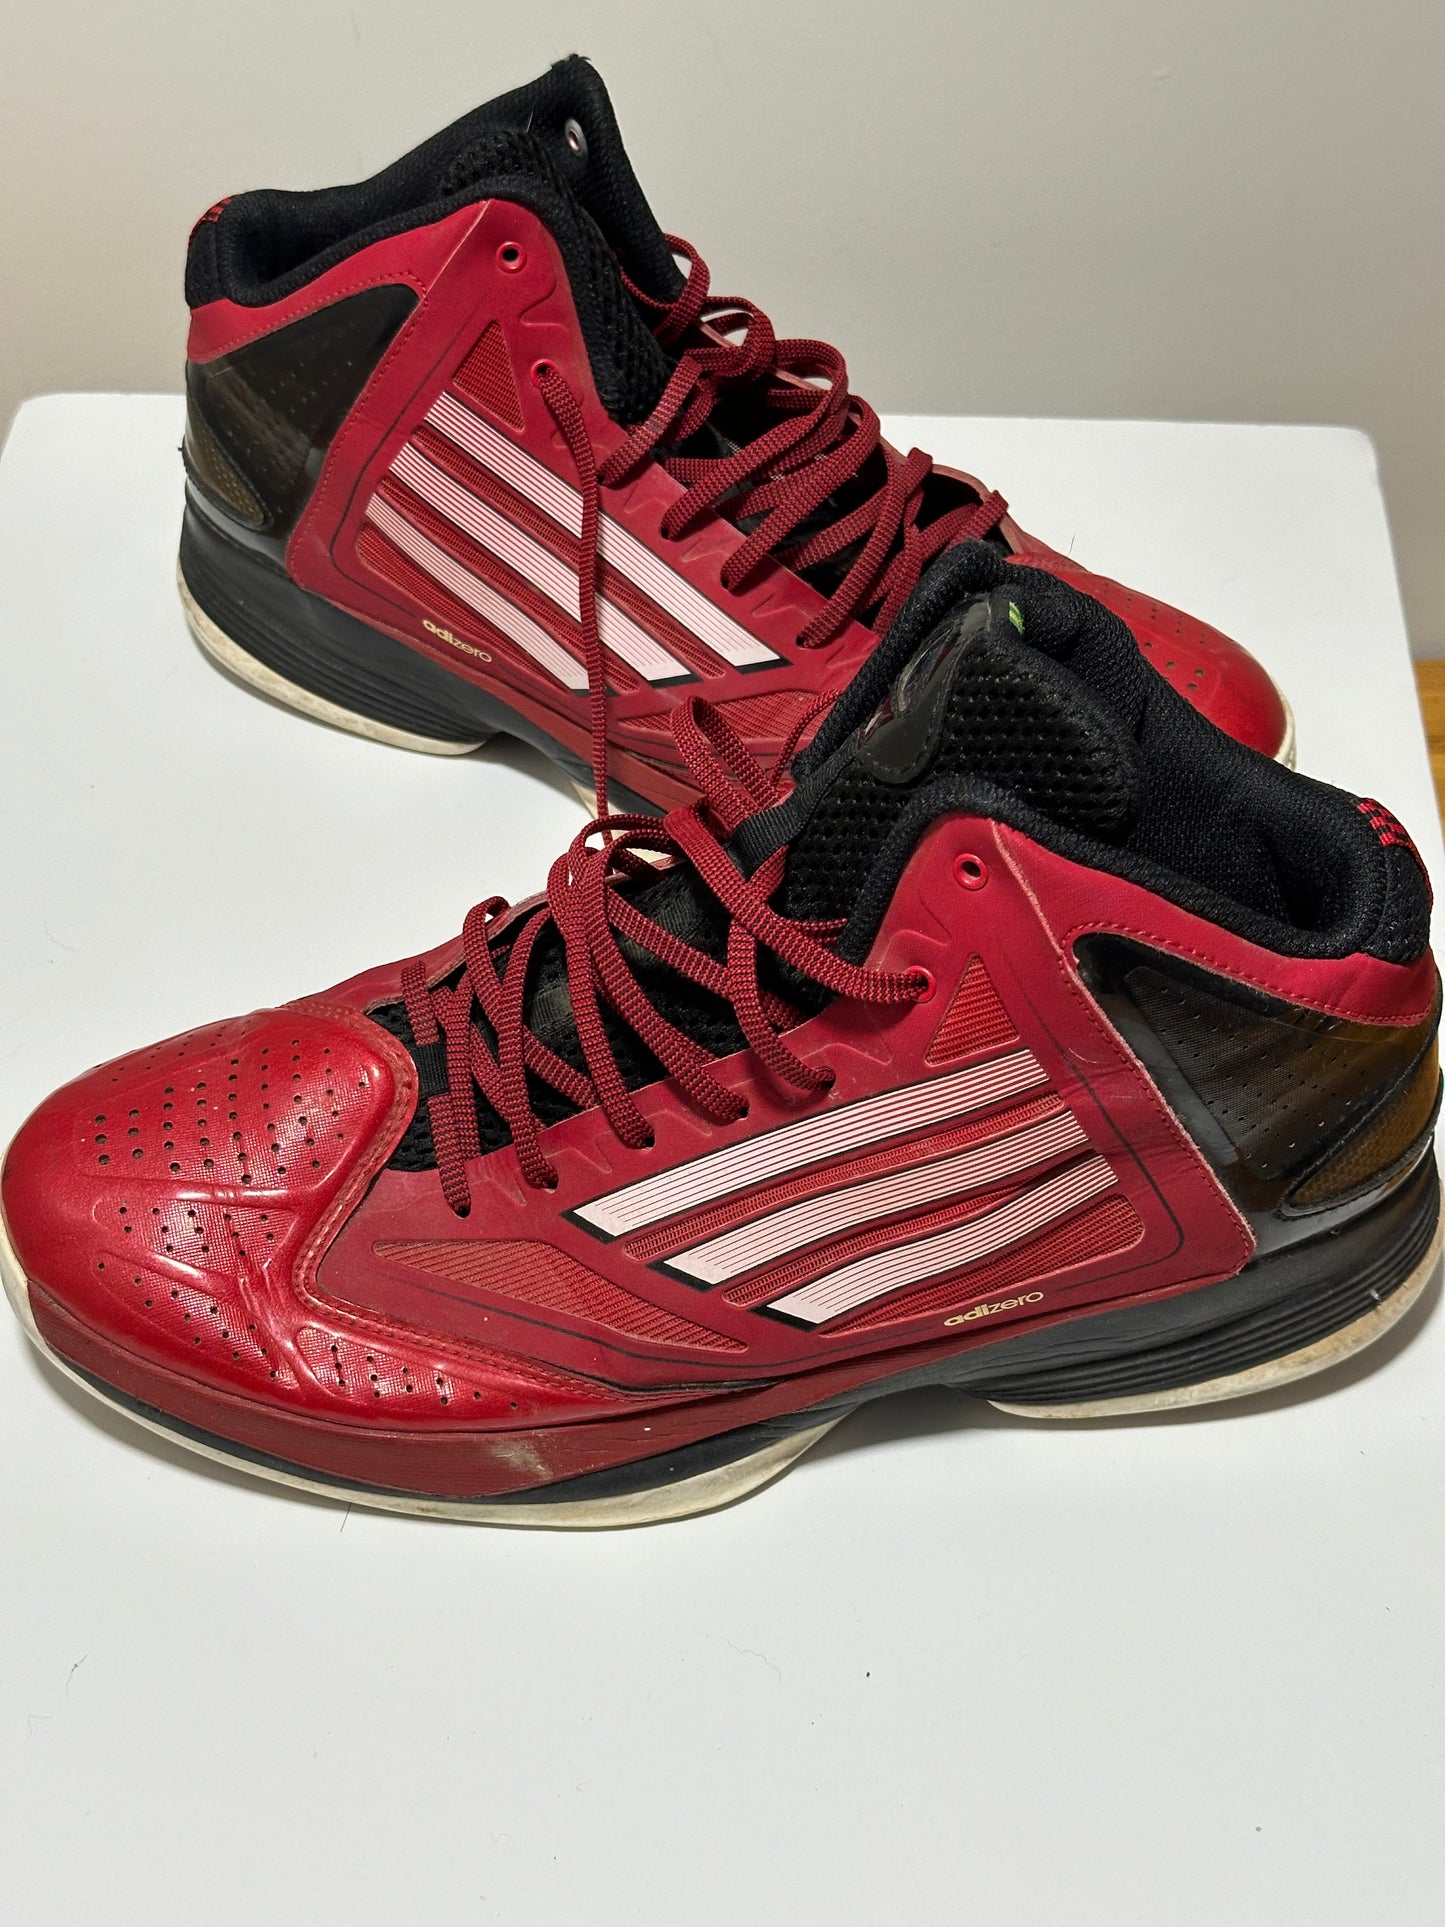 Adidas Adizero Ghost 2.0 Basketball Shoes - Men's 10.5 - VGUC